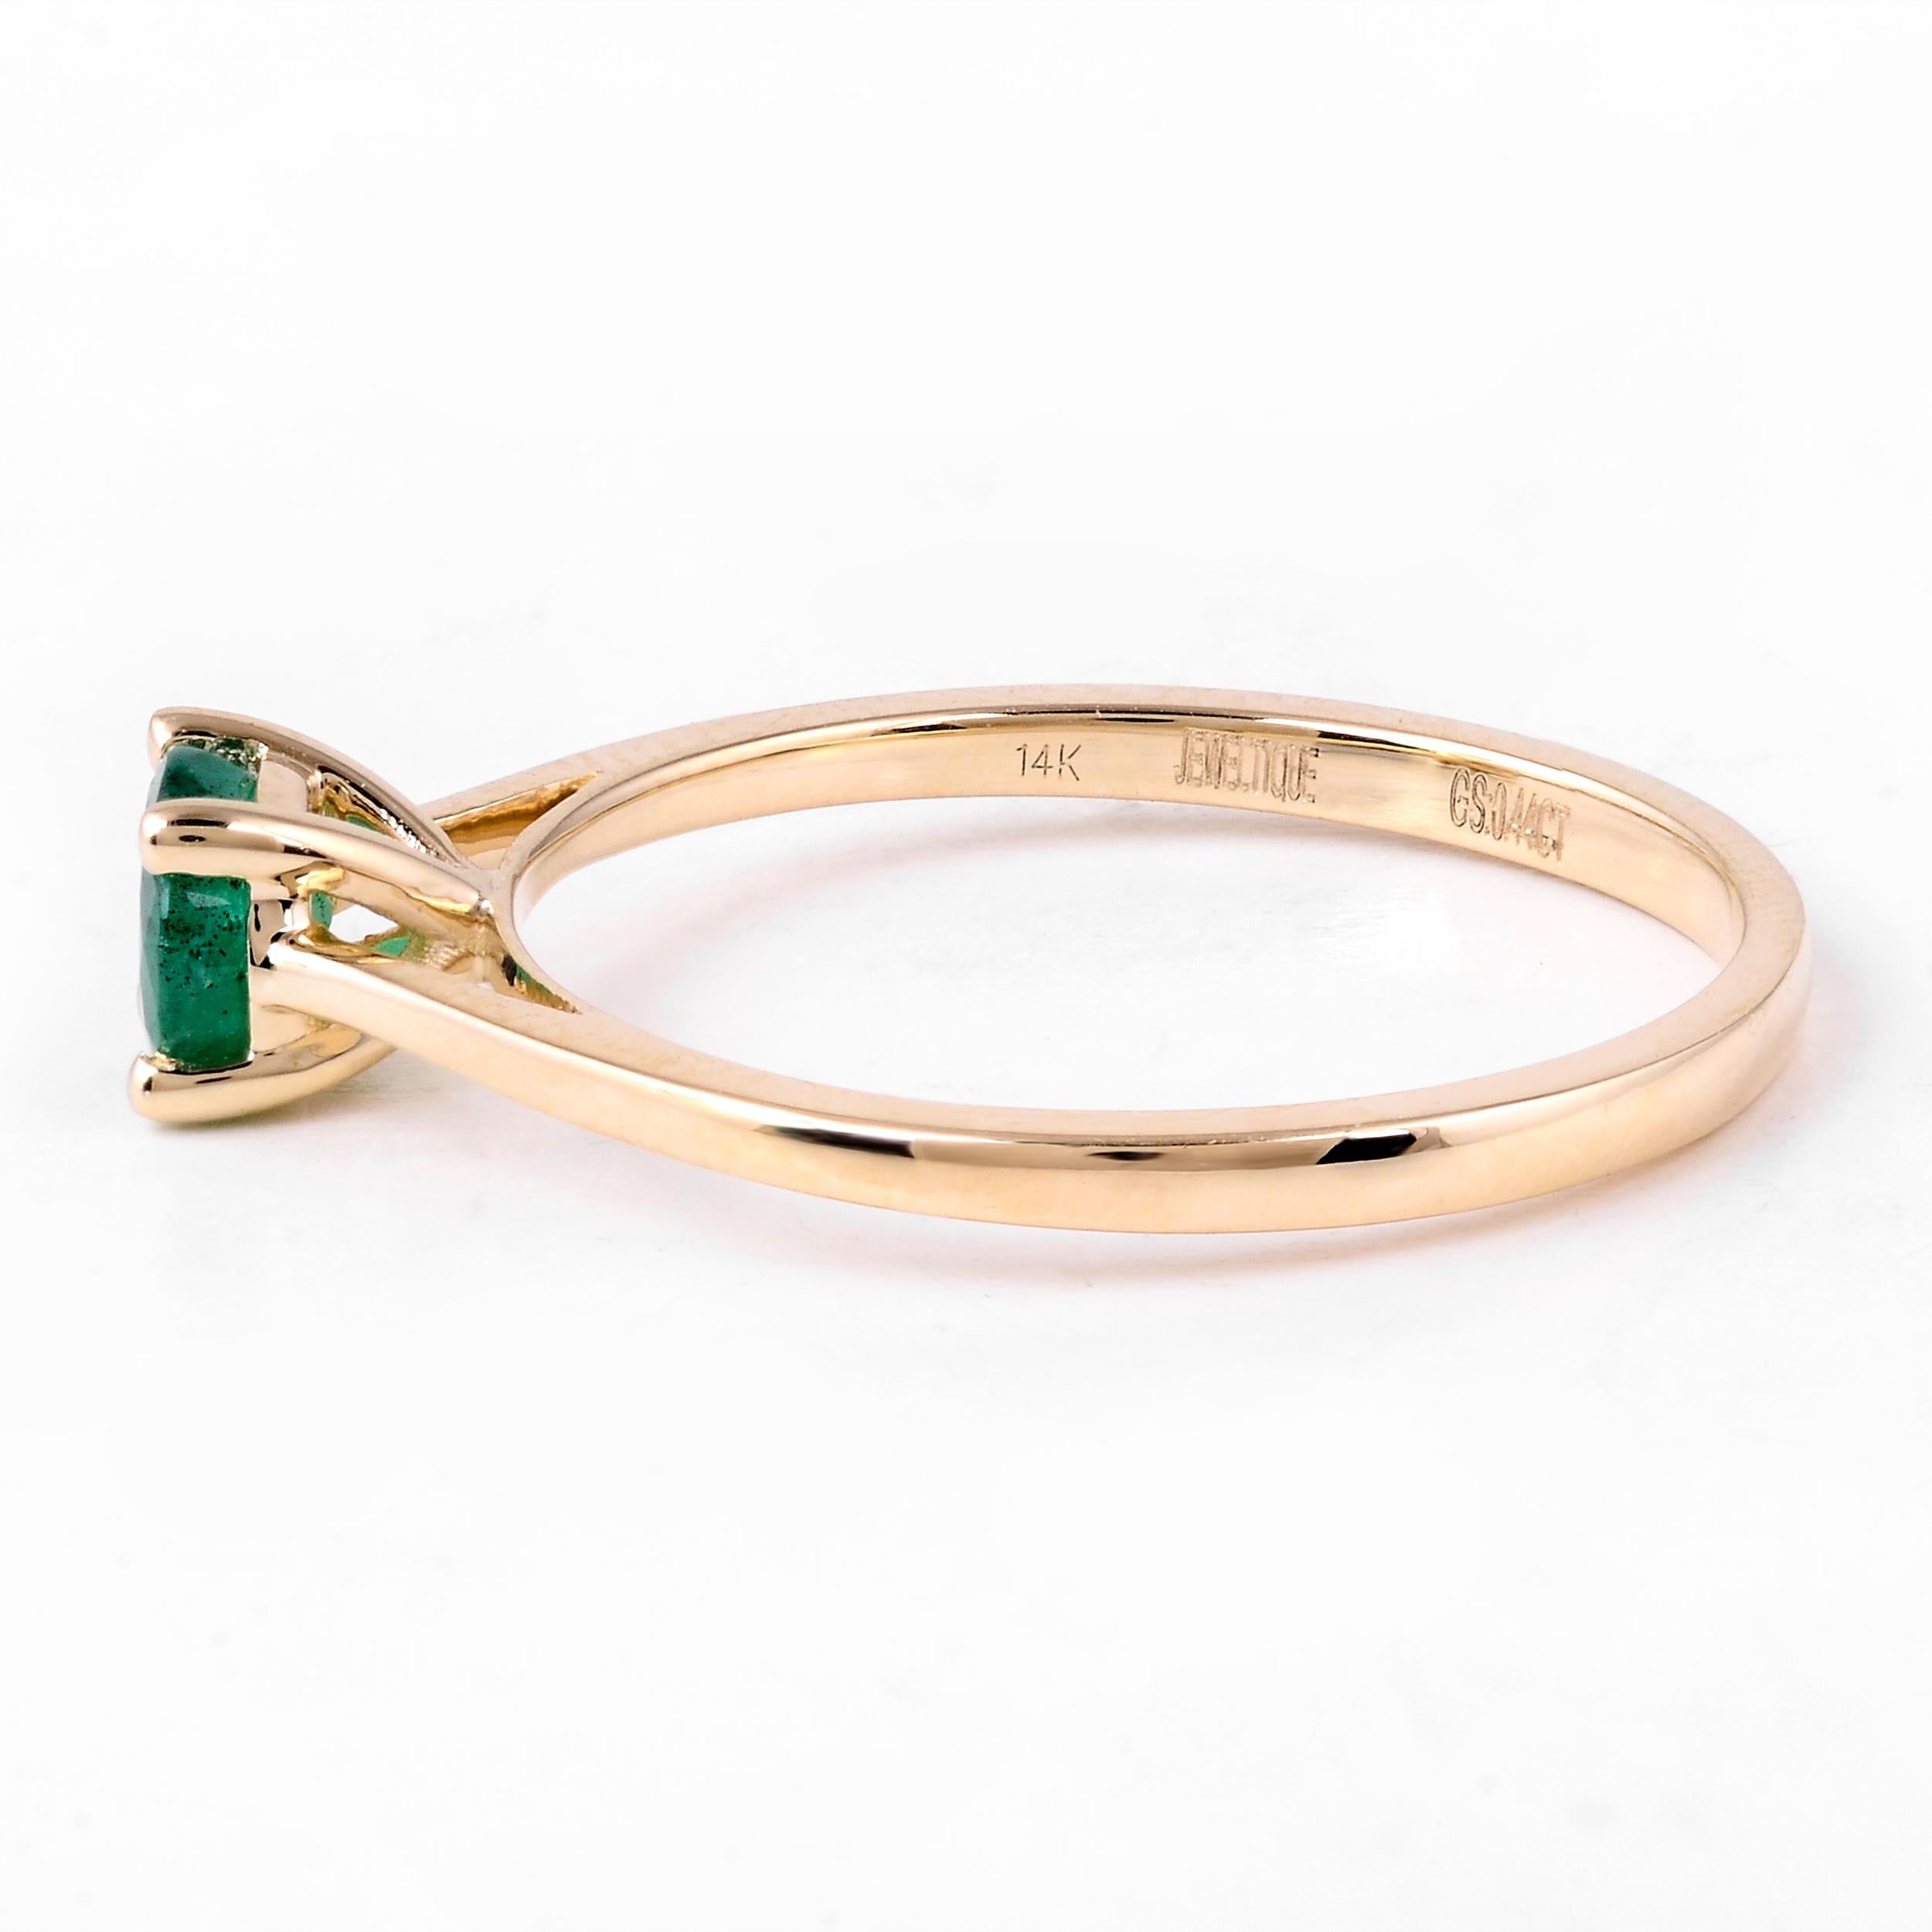 Luxurious 14K Emerald Cocktail Ring, Size 7 - Elegant Statement Jewelry Piece 1